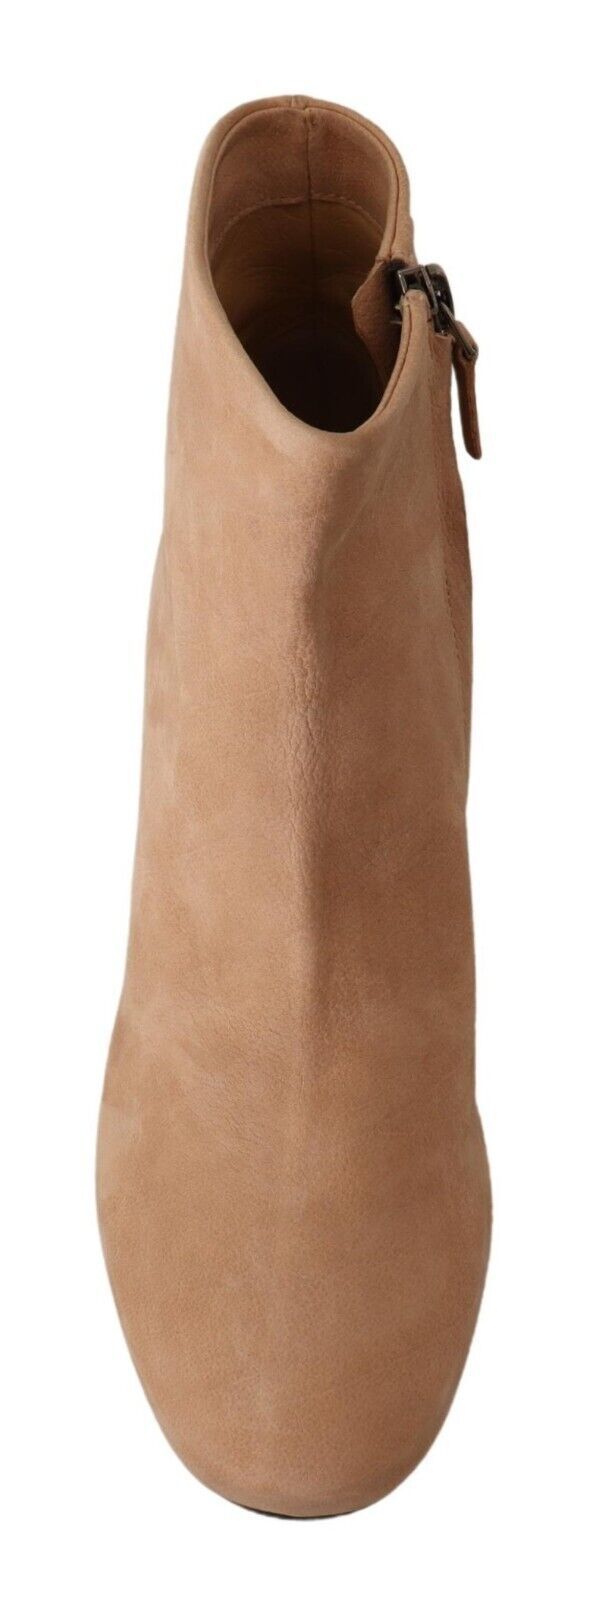 Elegant Beige Leather Boots